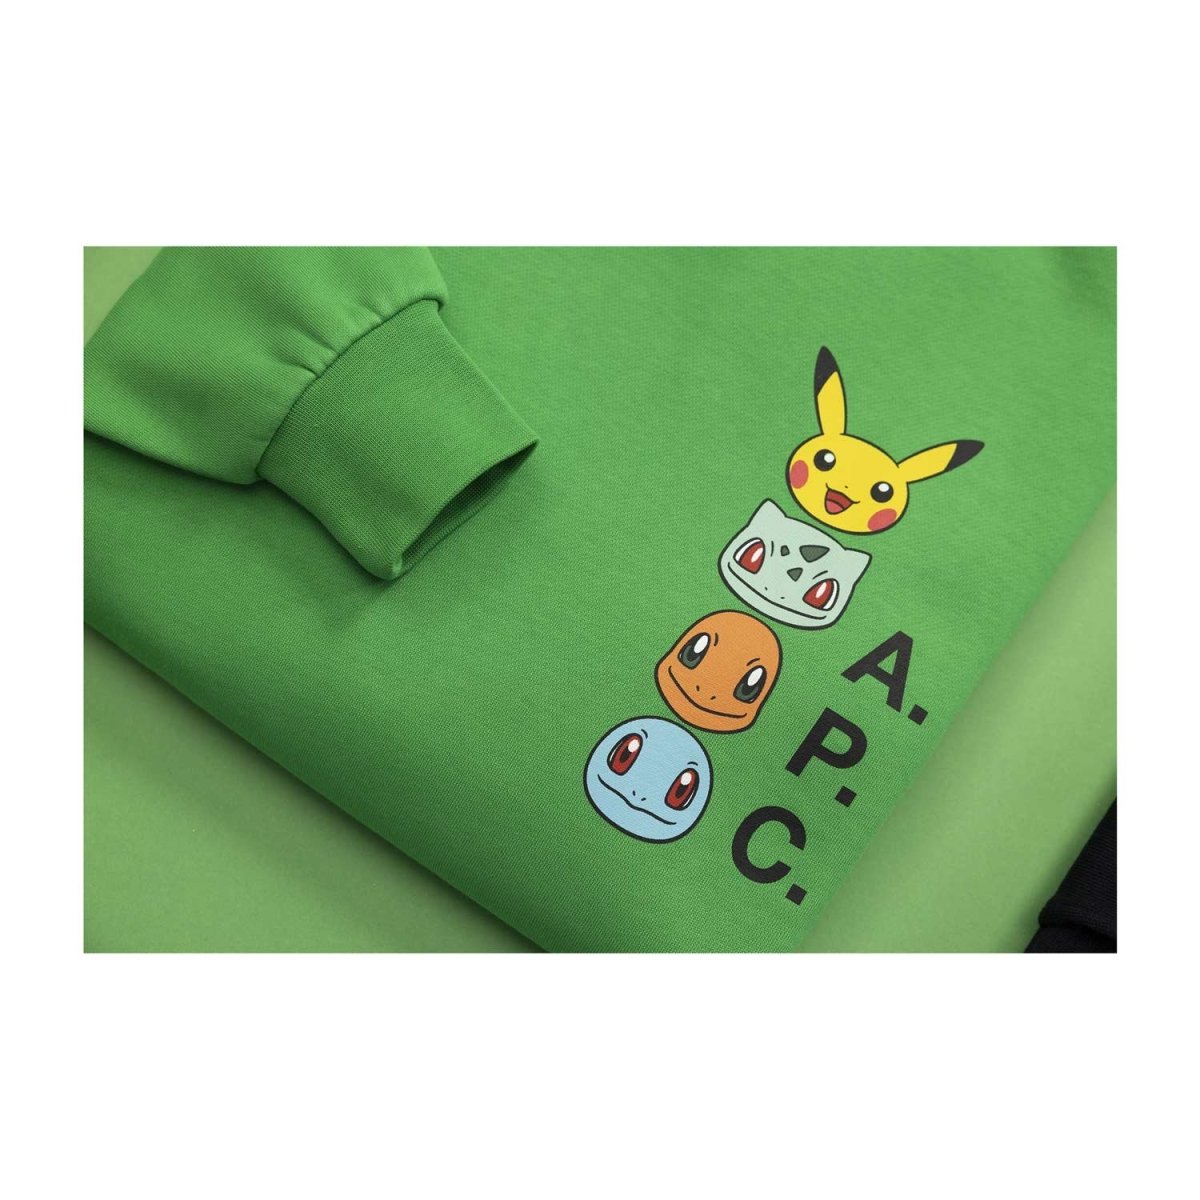 Pokémon × A.P.C.: Green The Portrait Sweatshirt - Women